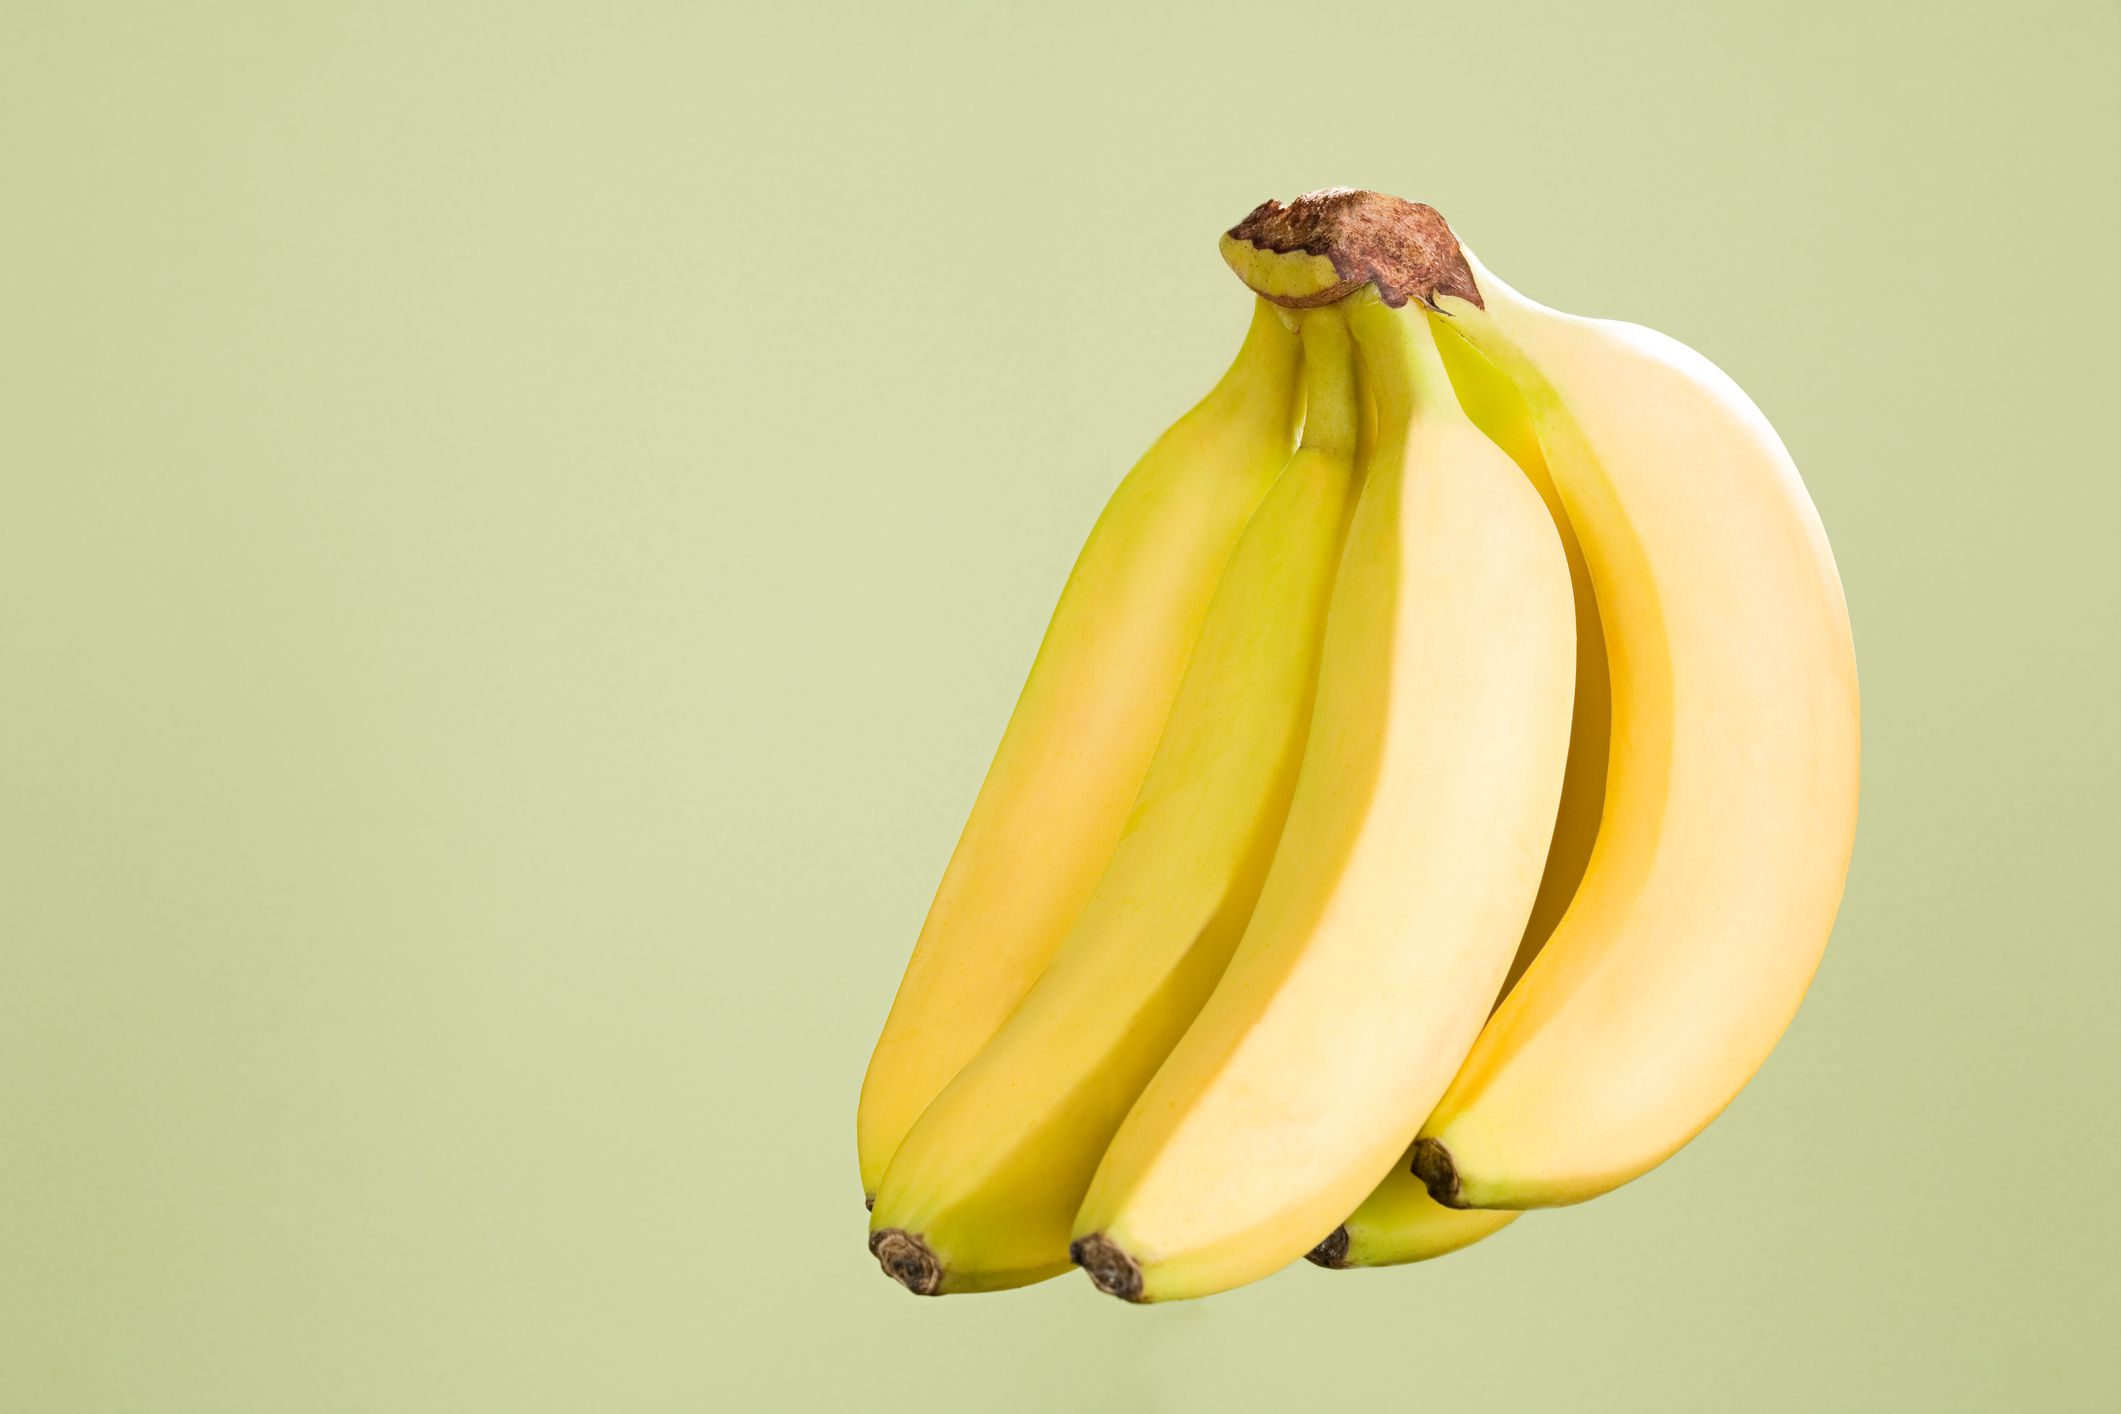 masa muscular: tres frutas que ayudan a aumentarla de manera natural